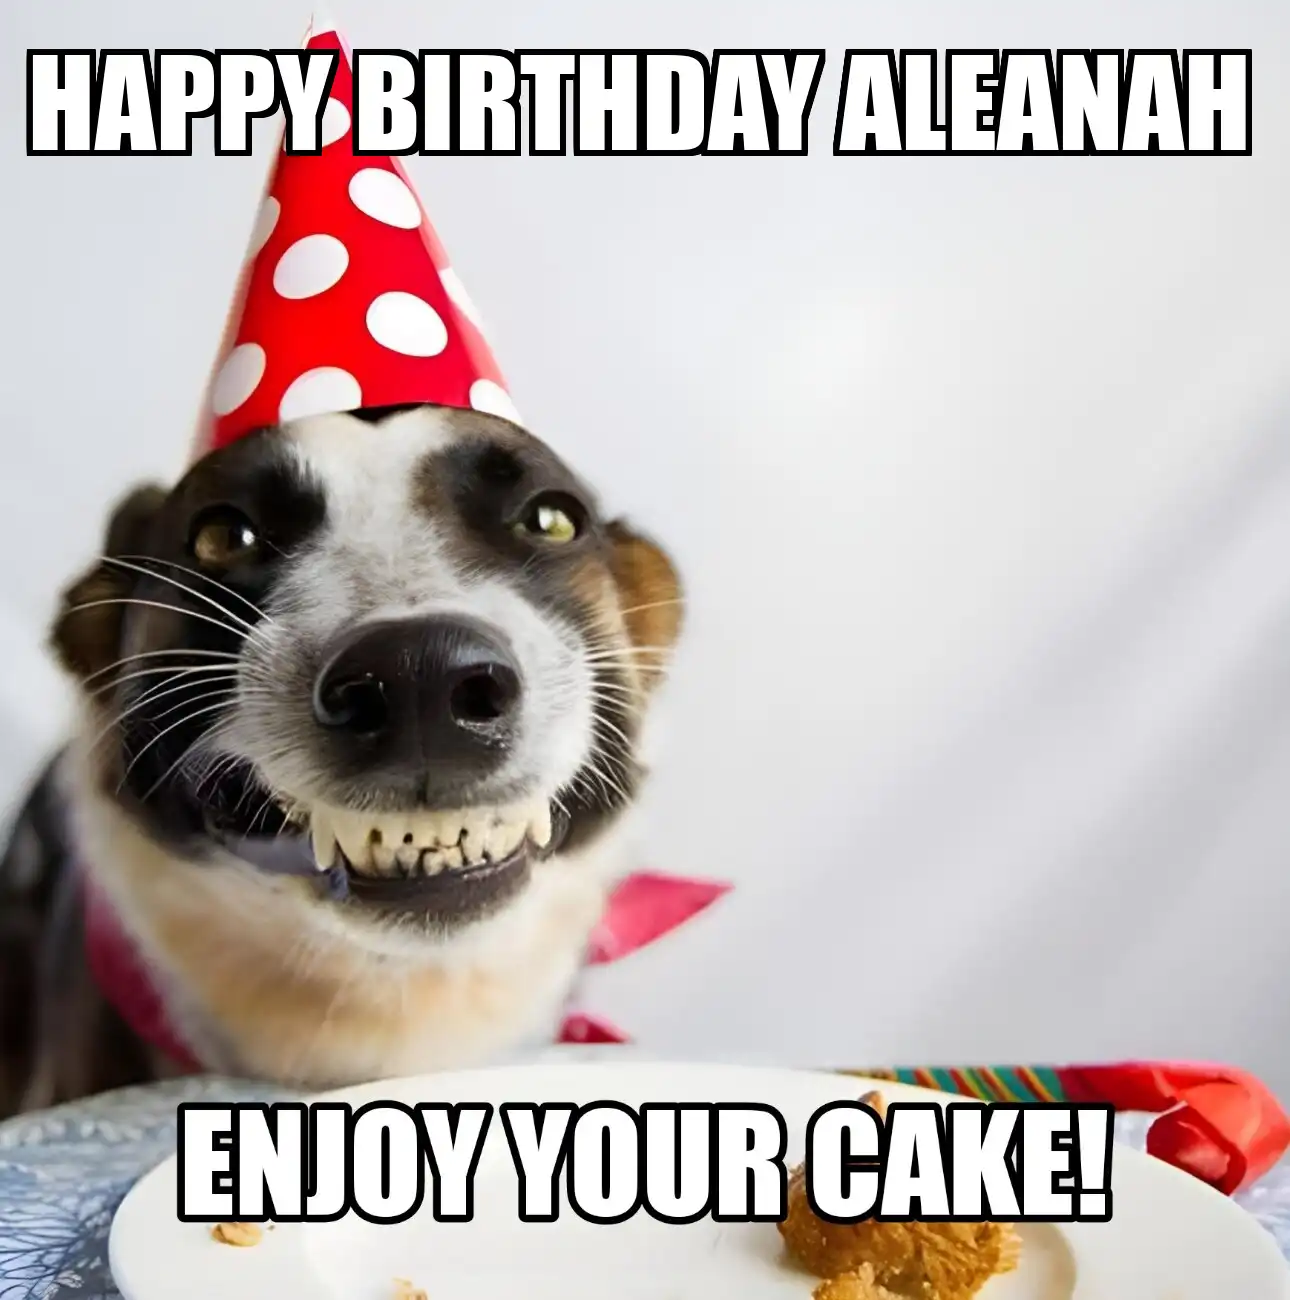 Happy Birthday Aleanah Enjoy Your Cake Dog Meme